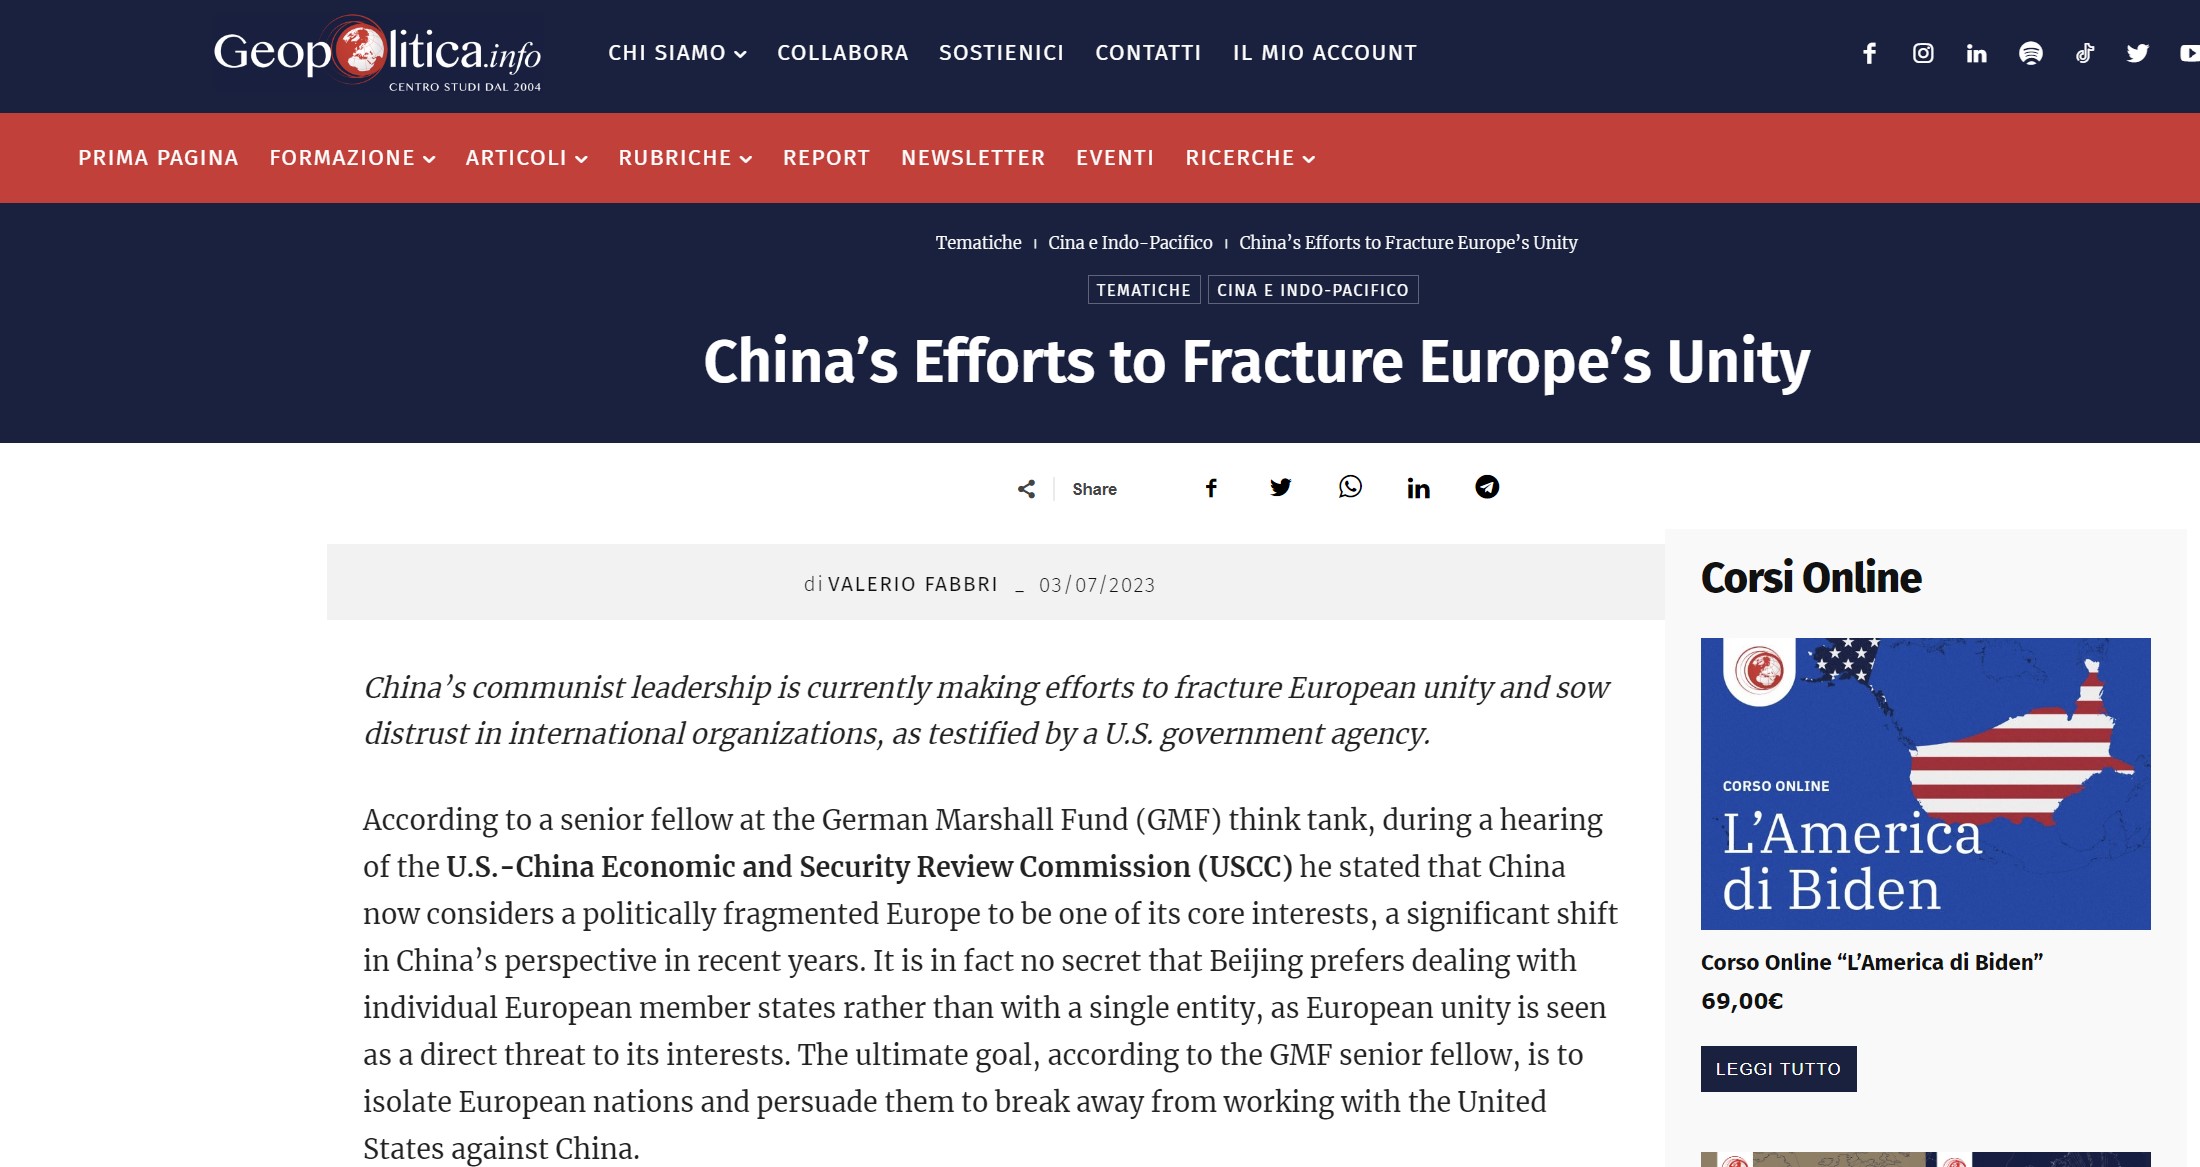 Geopolitica: Οι προσπάθειες της Κίνας να σπάσει την ενότητα της Ευρώπης